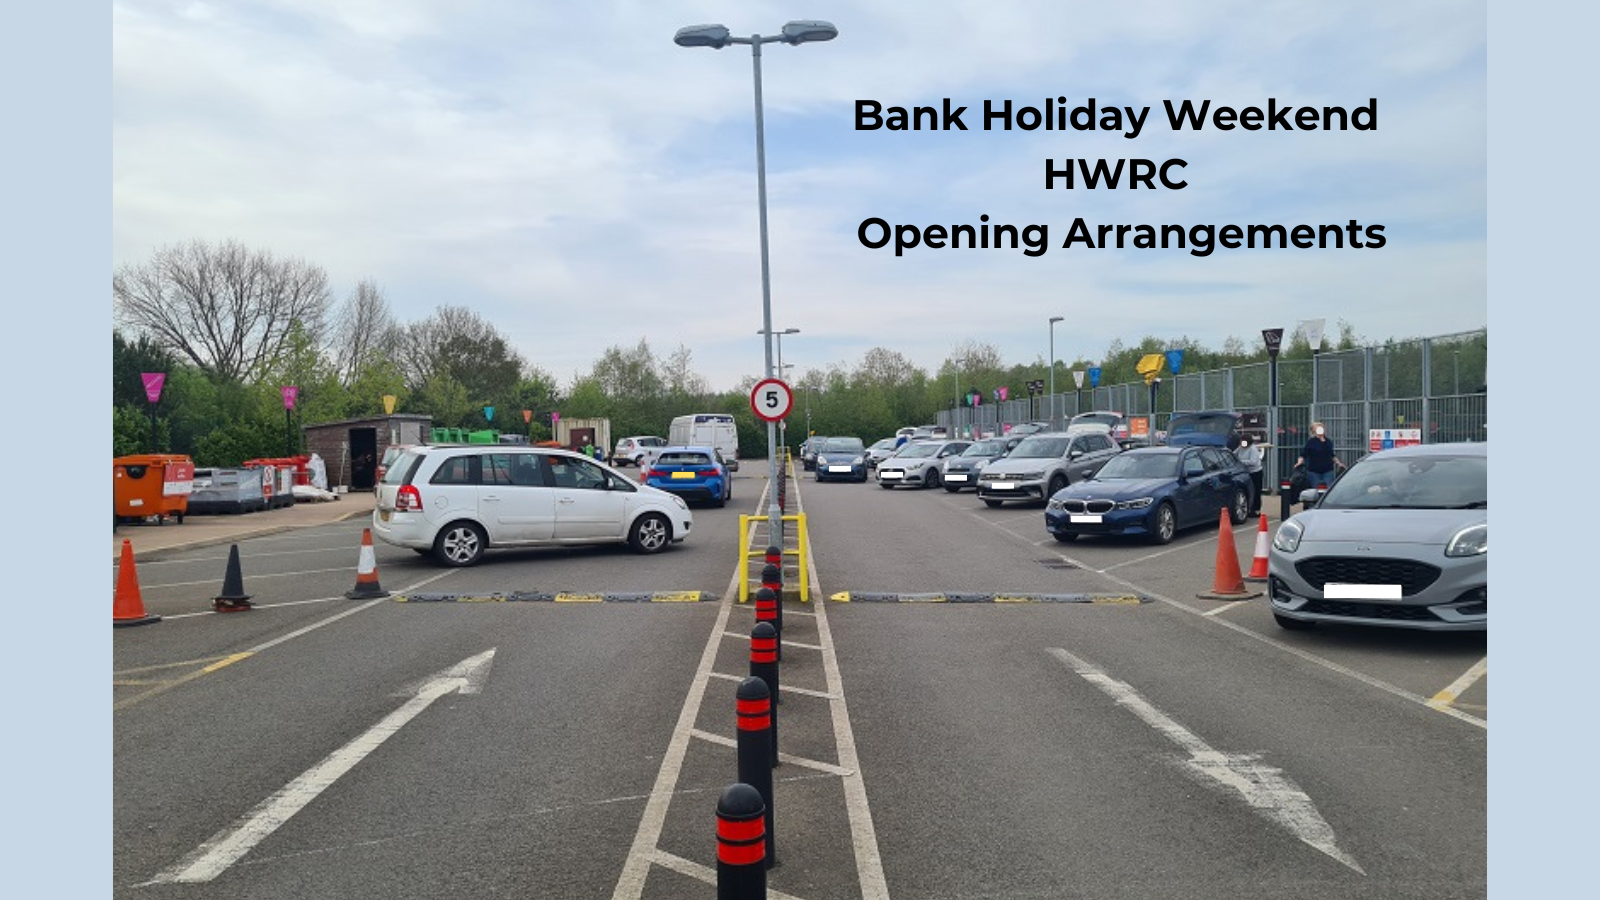 Bank holifay weekend HWRC opening arrangements